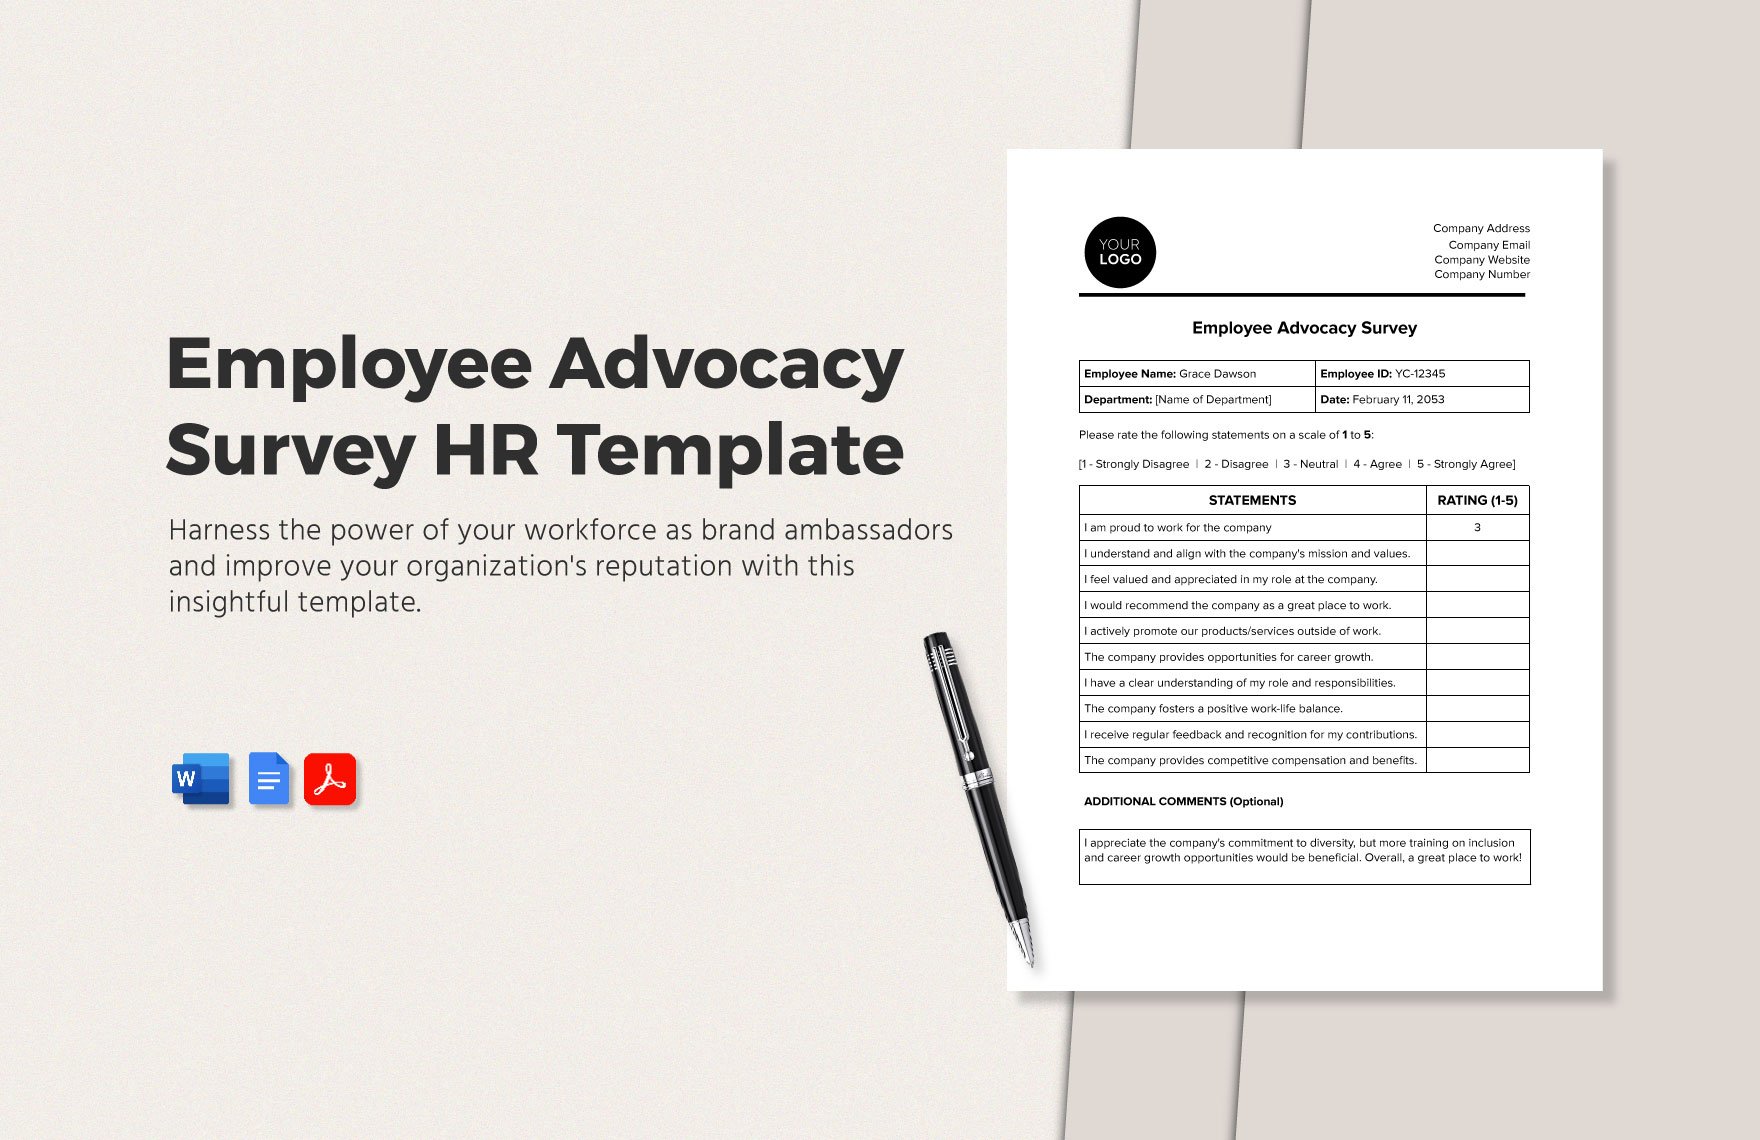 Employee Advocacy Survey HR Template